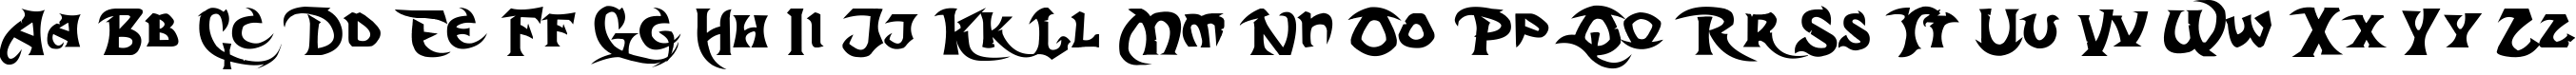 Пример написания английского алфавита шрифтом Dark Crystal Script